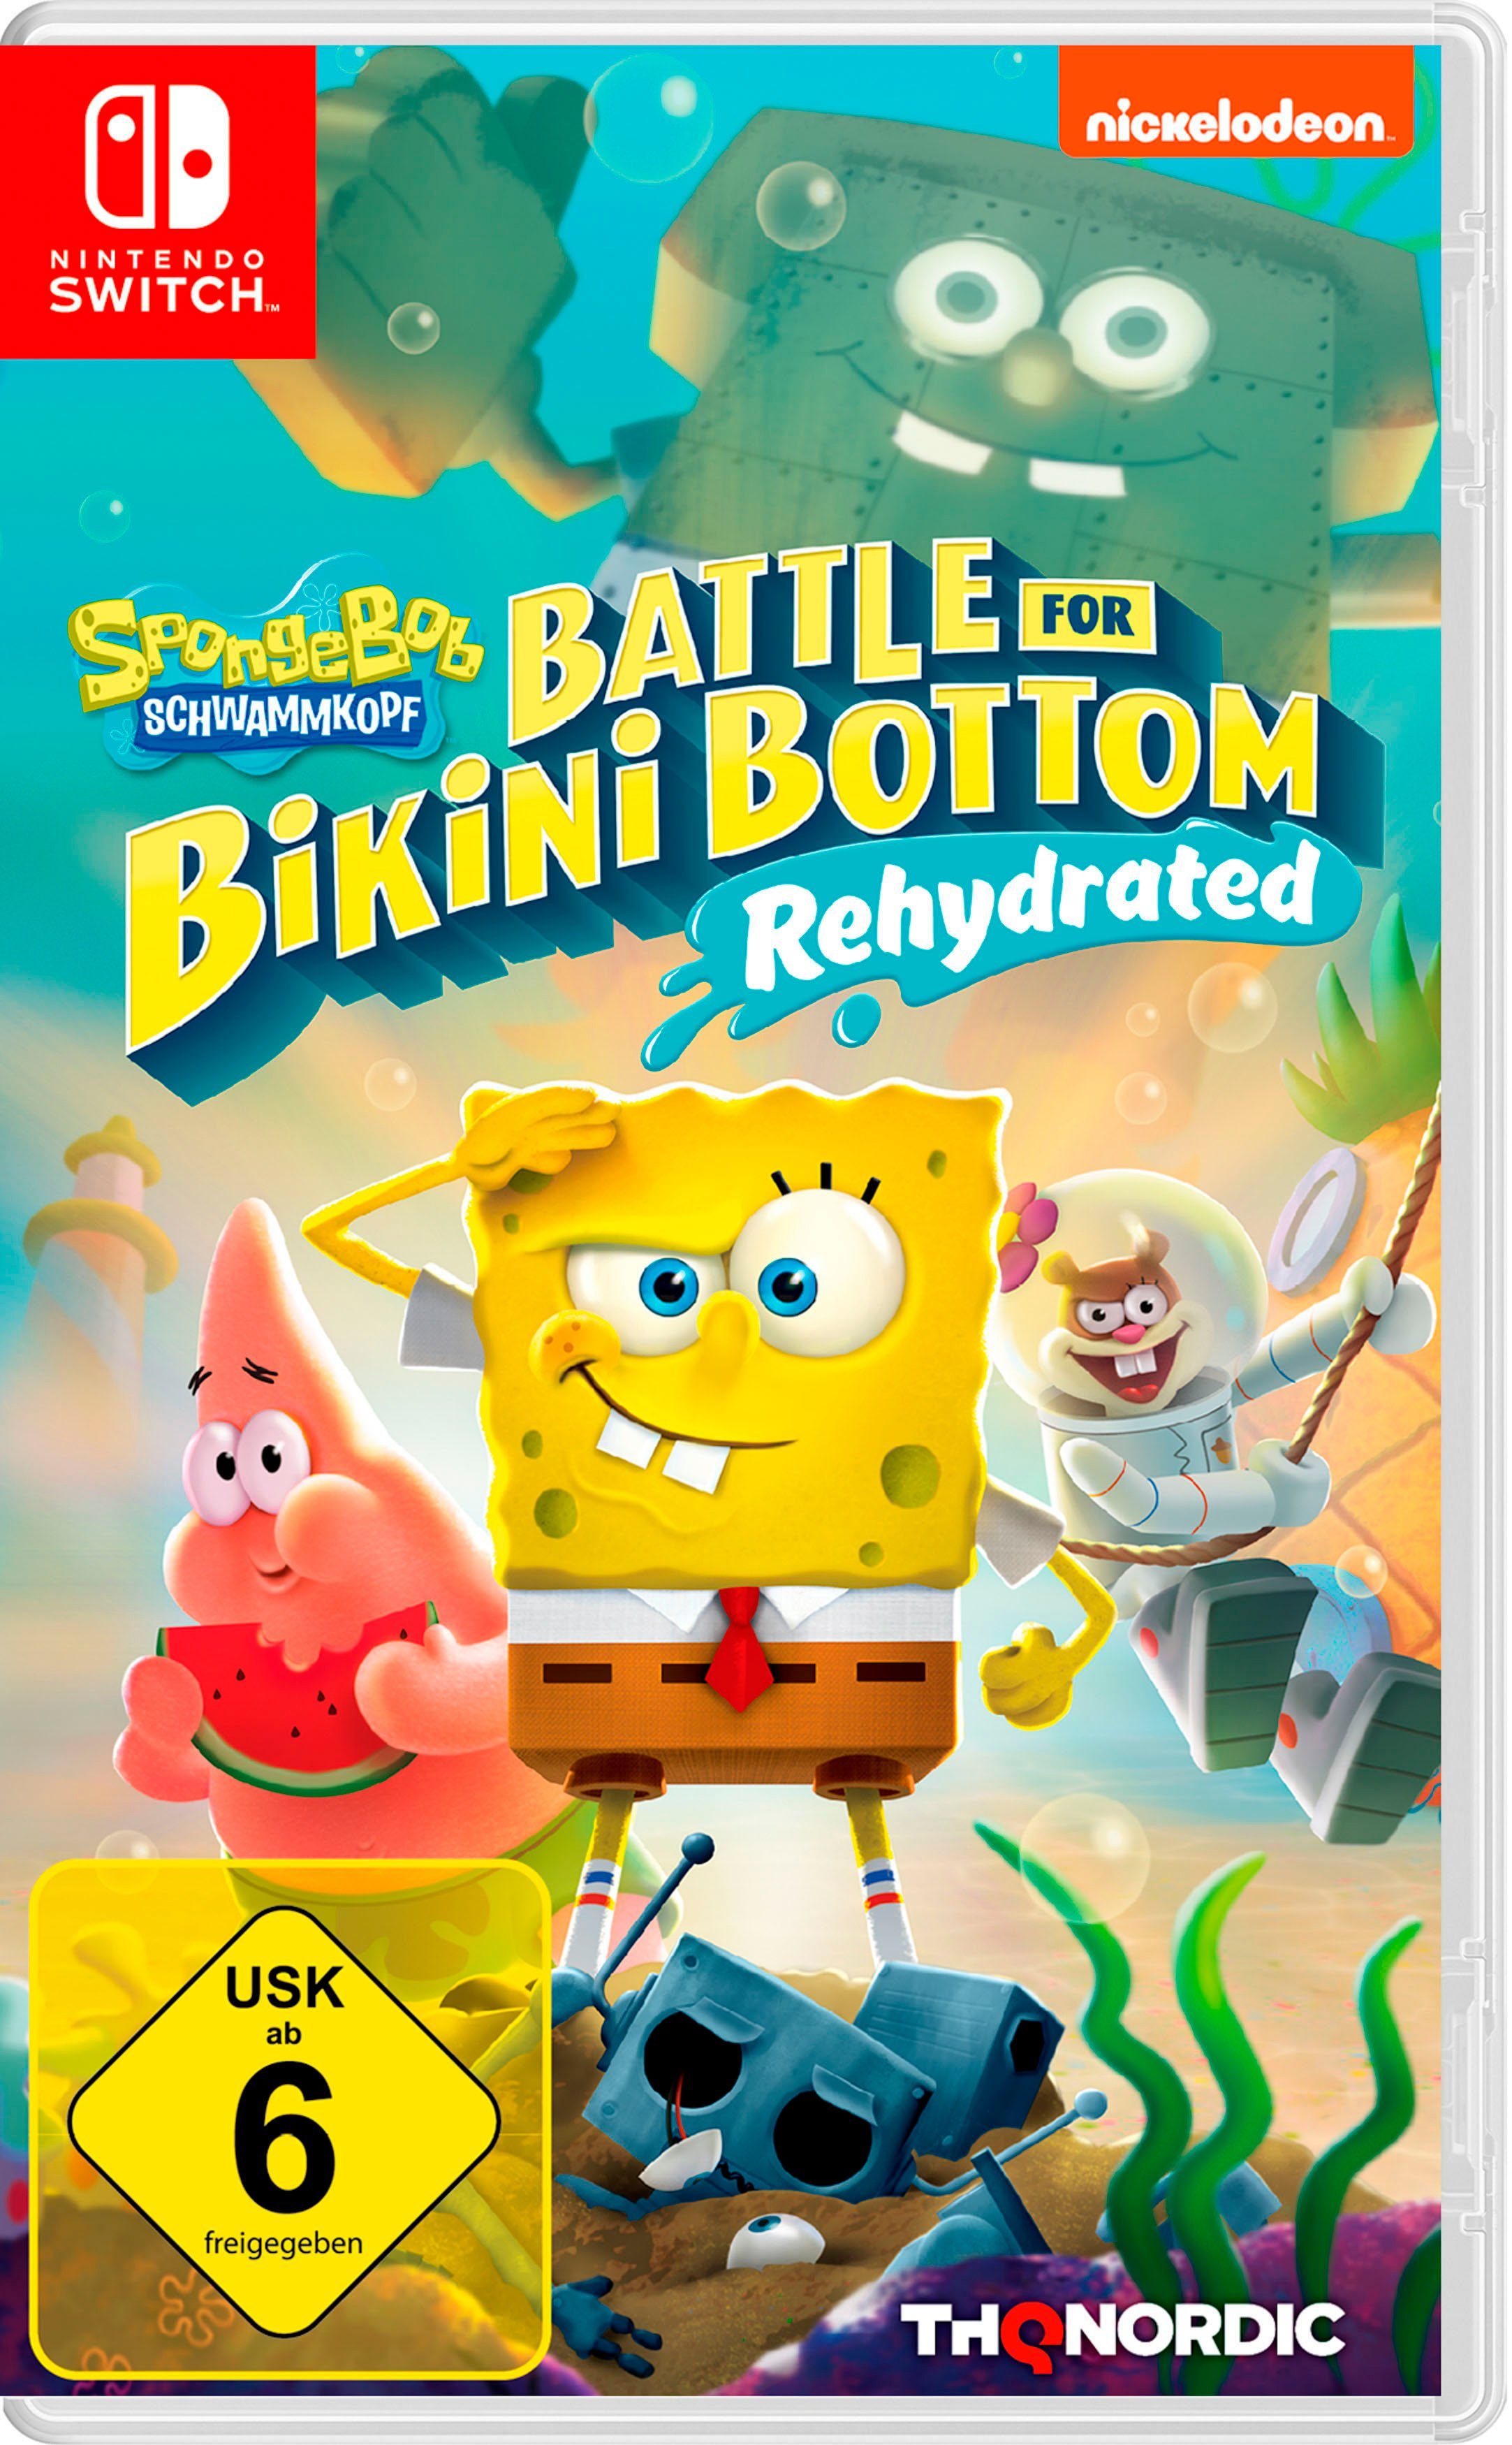 Spongebob Nordic Switch For Battle Nintendo Switch Rehydrated Bikini THQ Bottom Schwammkopf: -